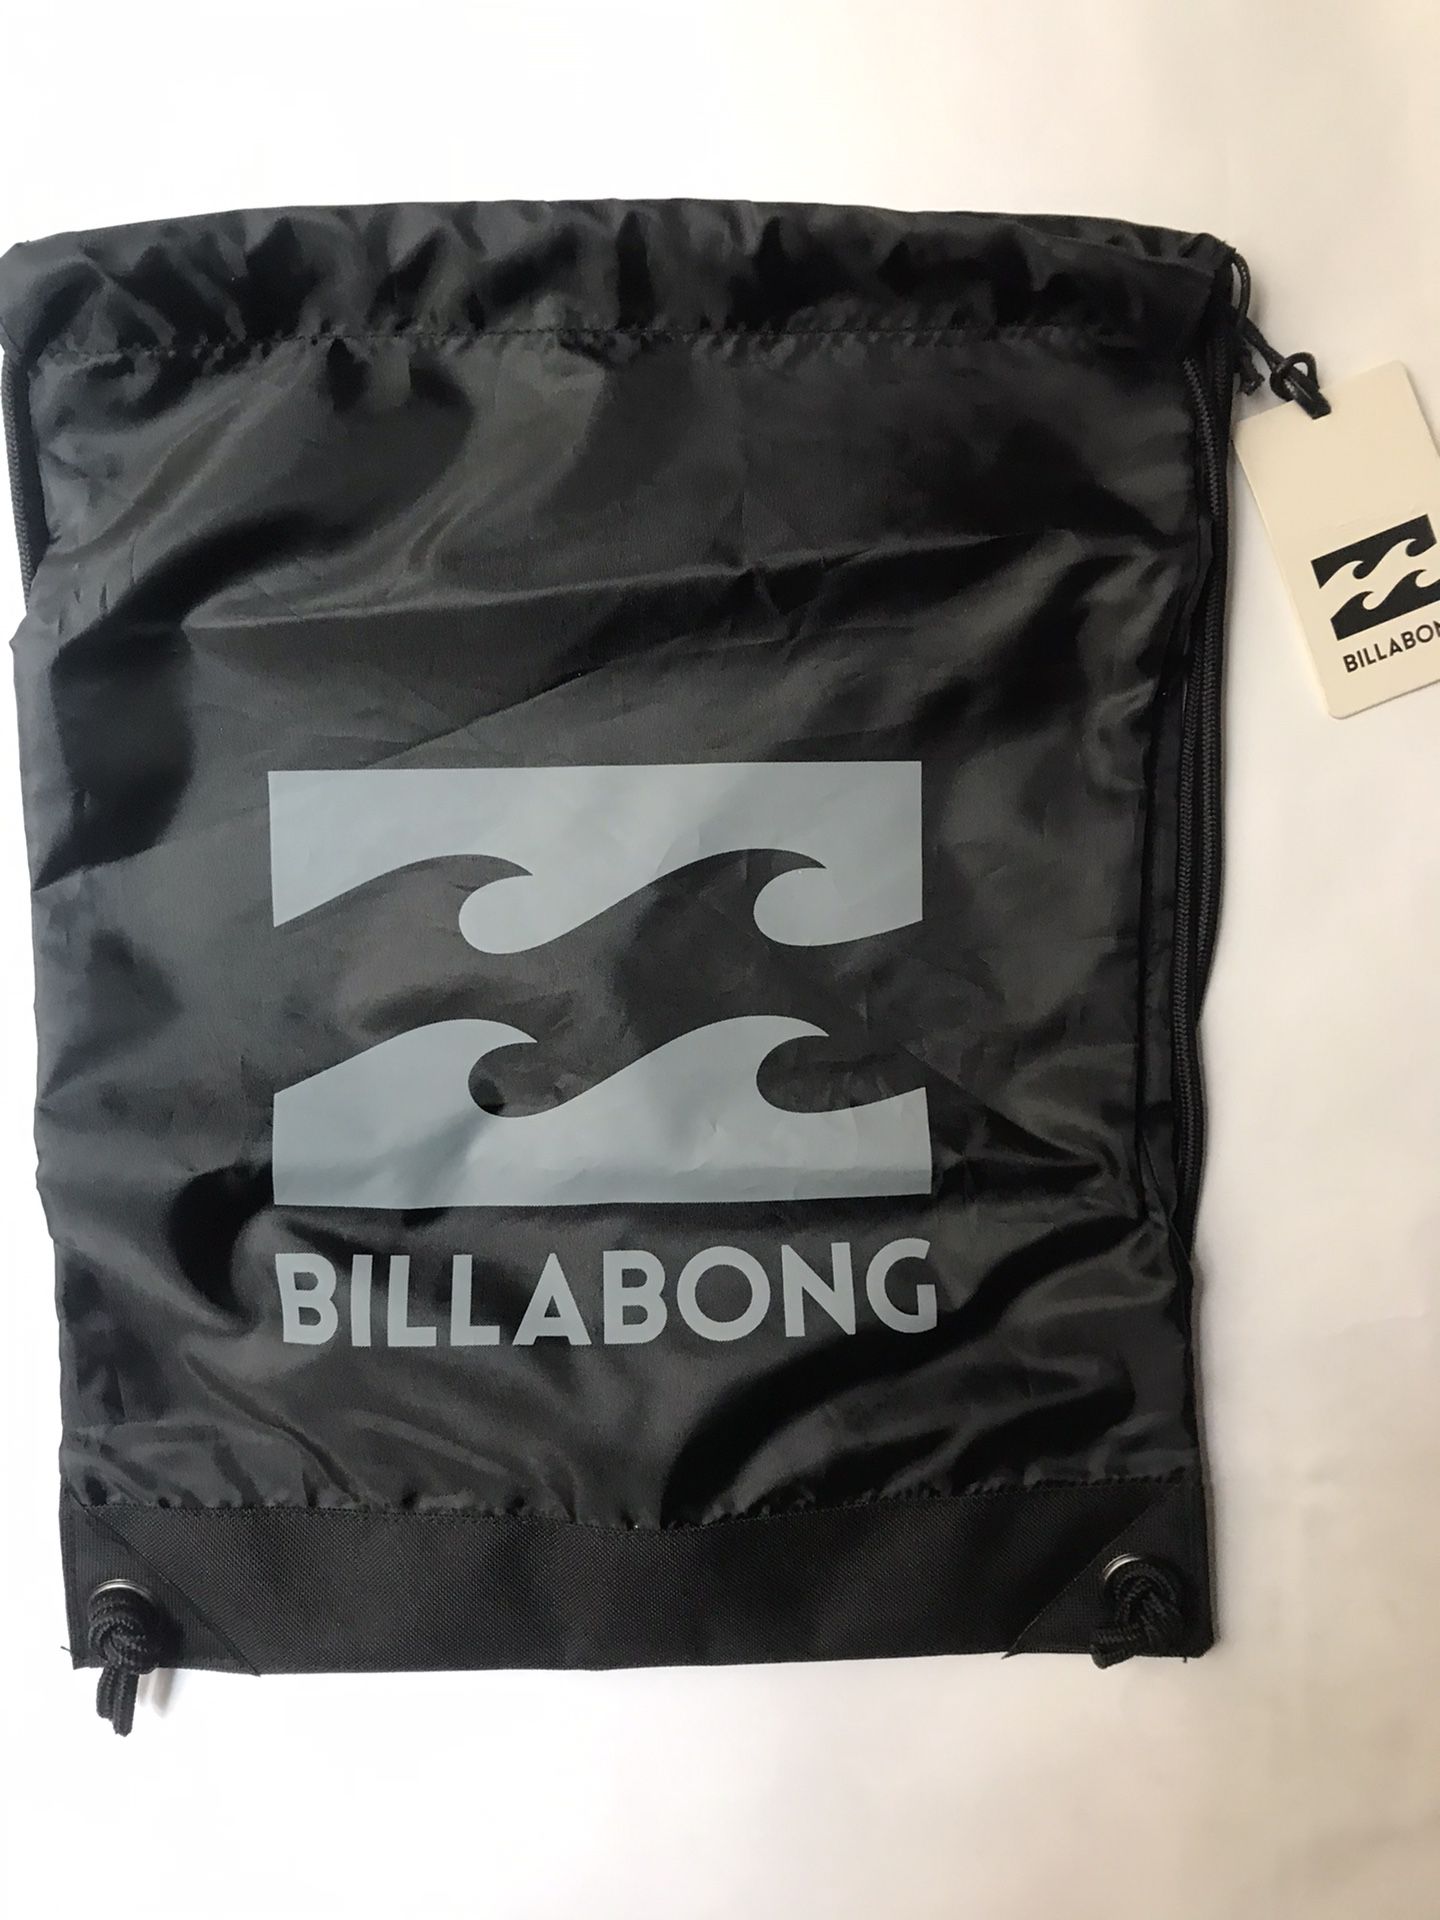 Billabong All Day Cinch Backpack - NEW - $15